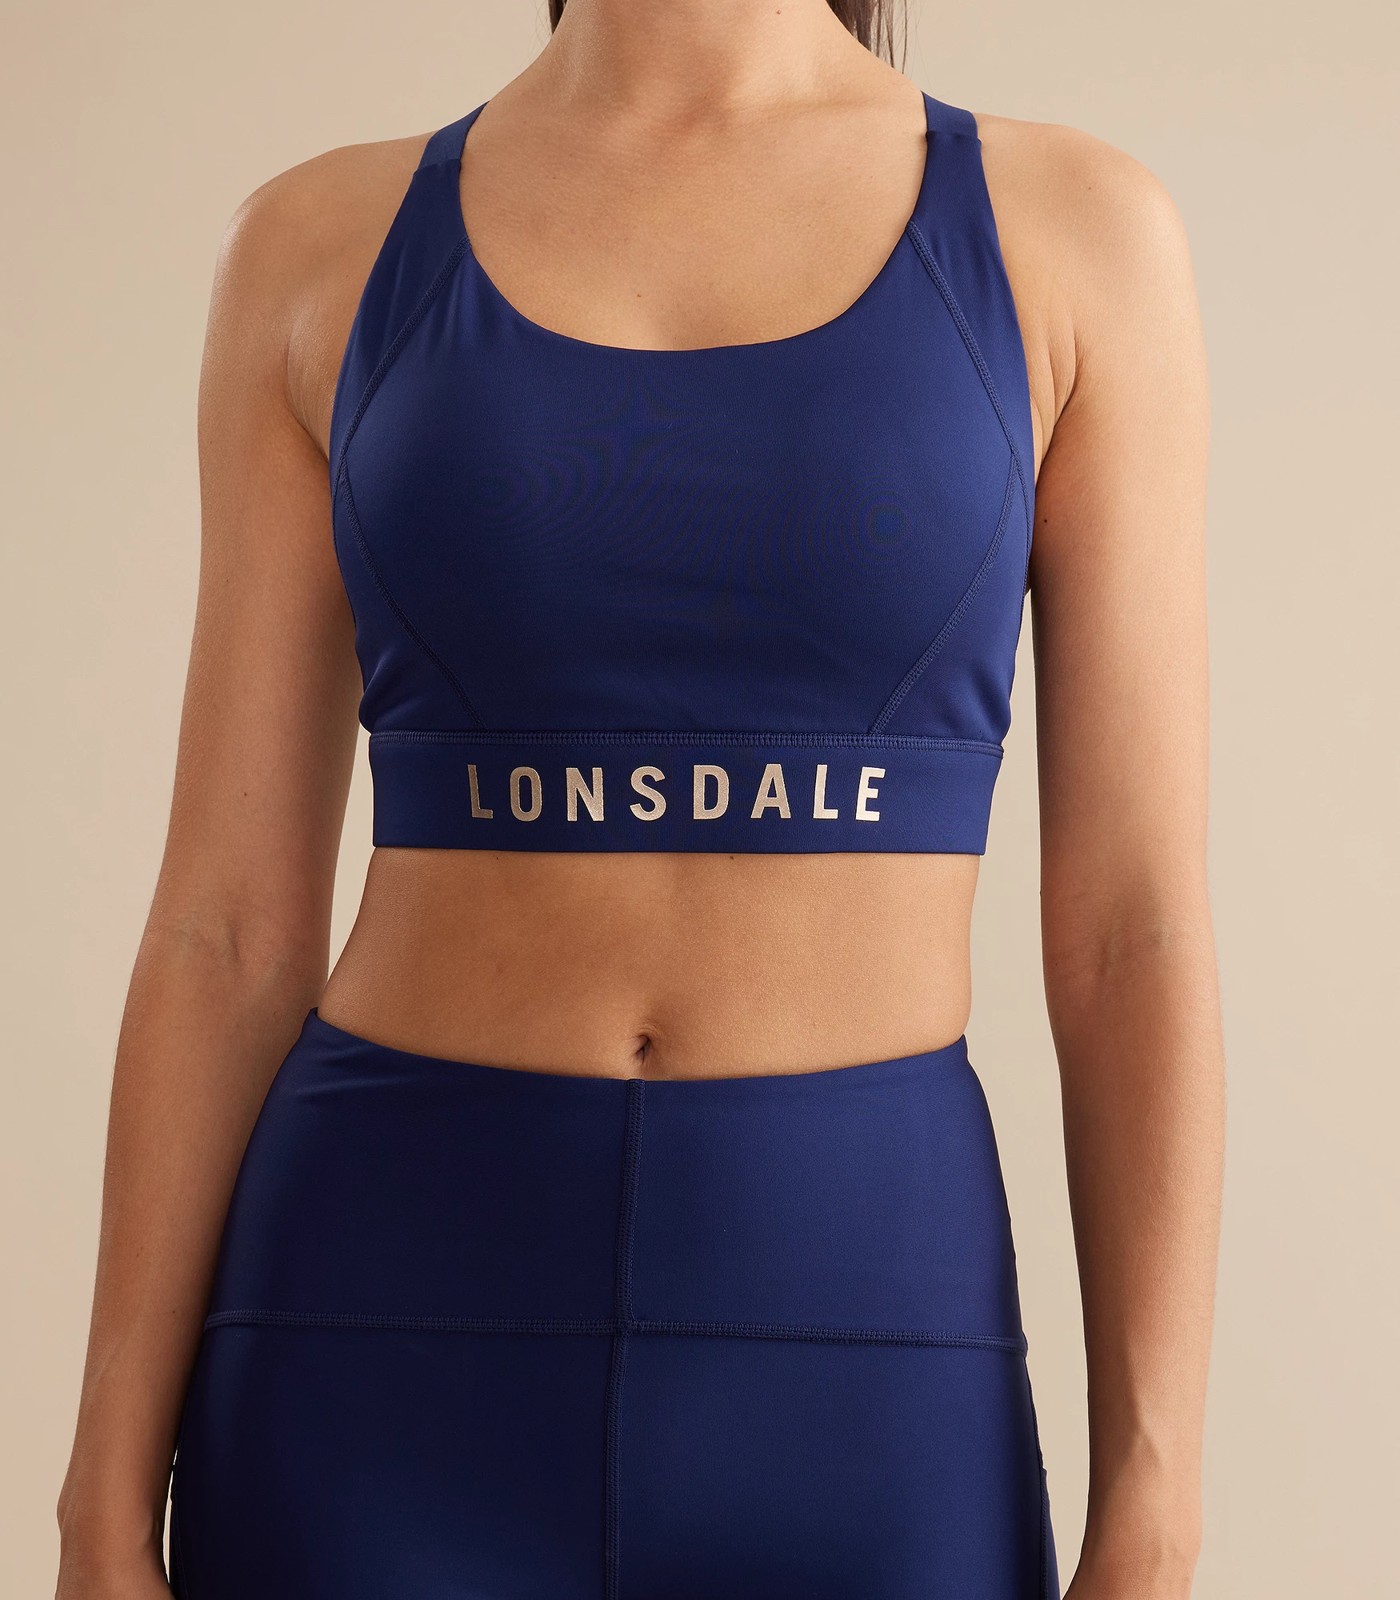 new & tags Lonsdale ladies Sports ATLEE crop top SZ xs 6 - 8 rp